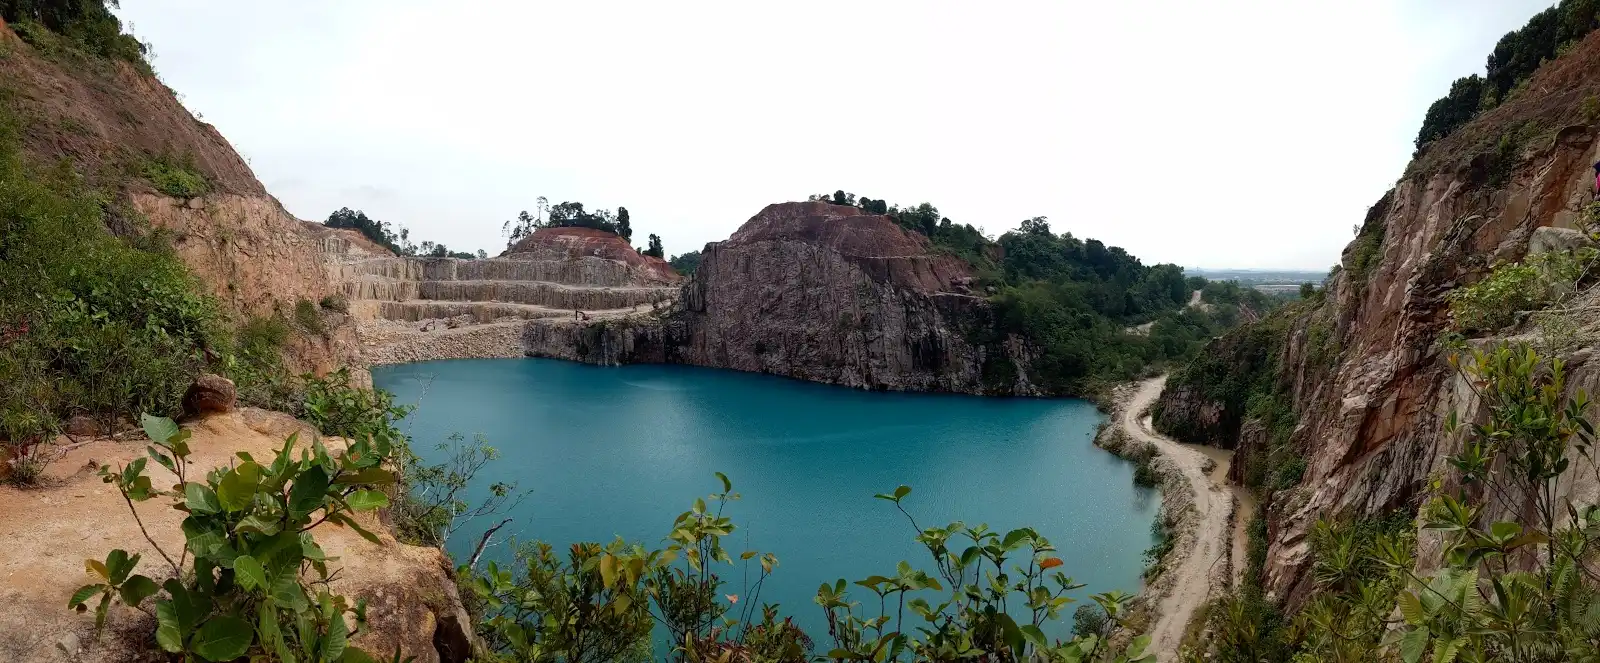 malaysia johor bahru listerine blue lagoon